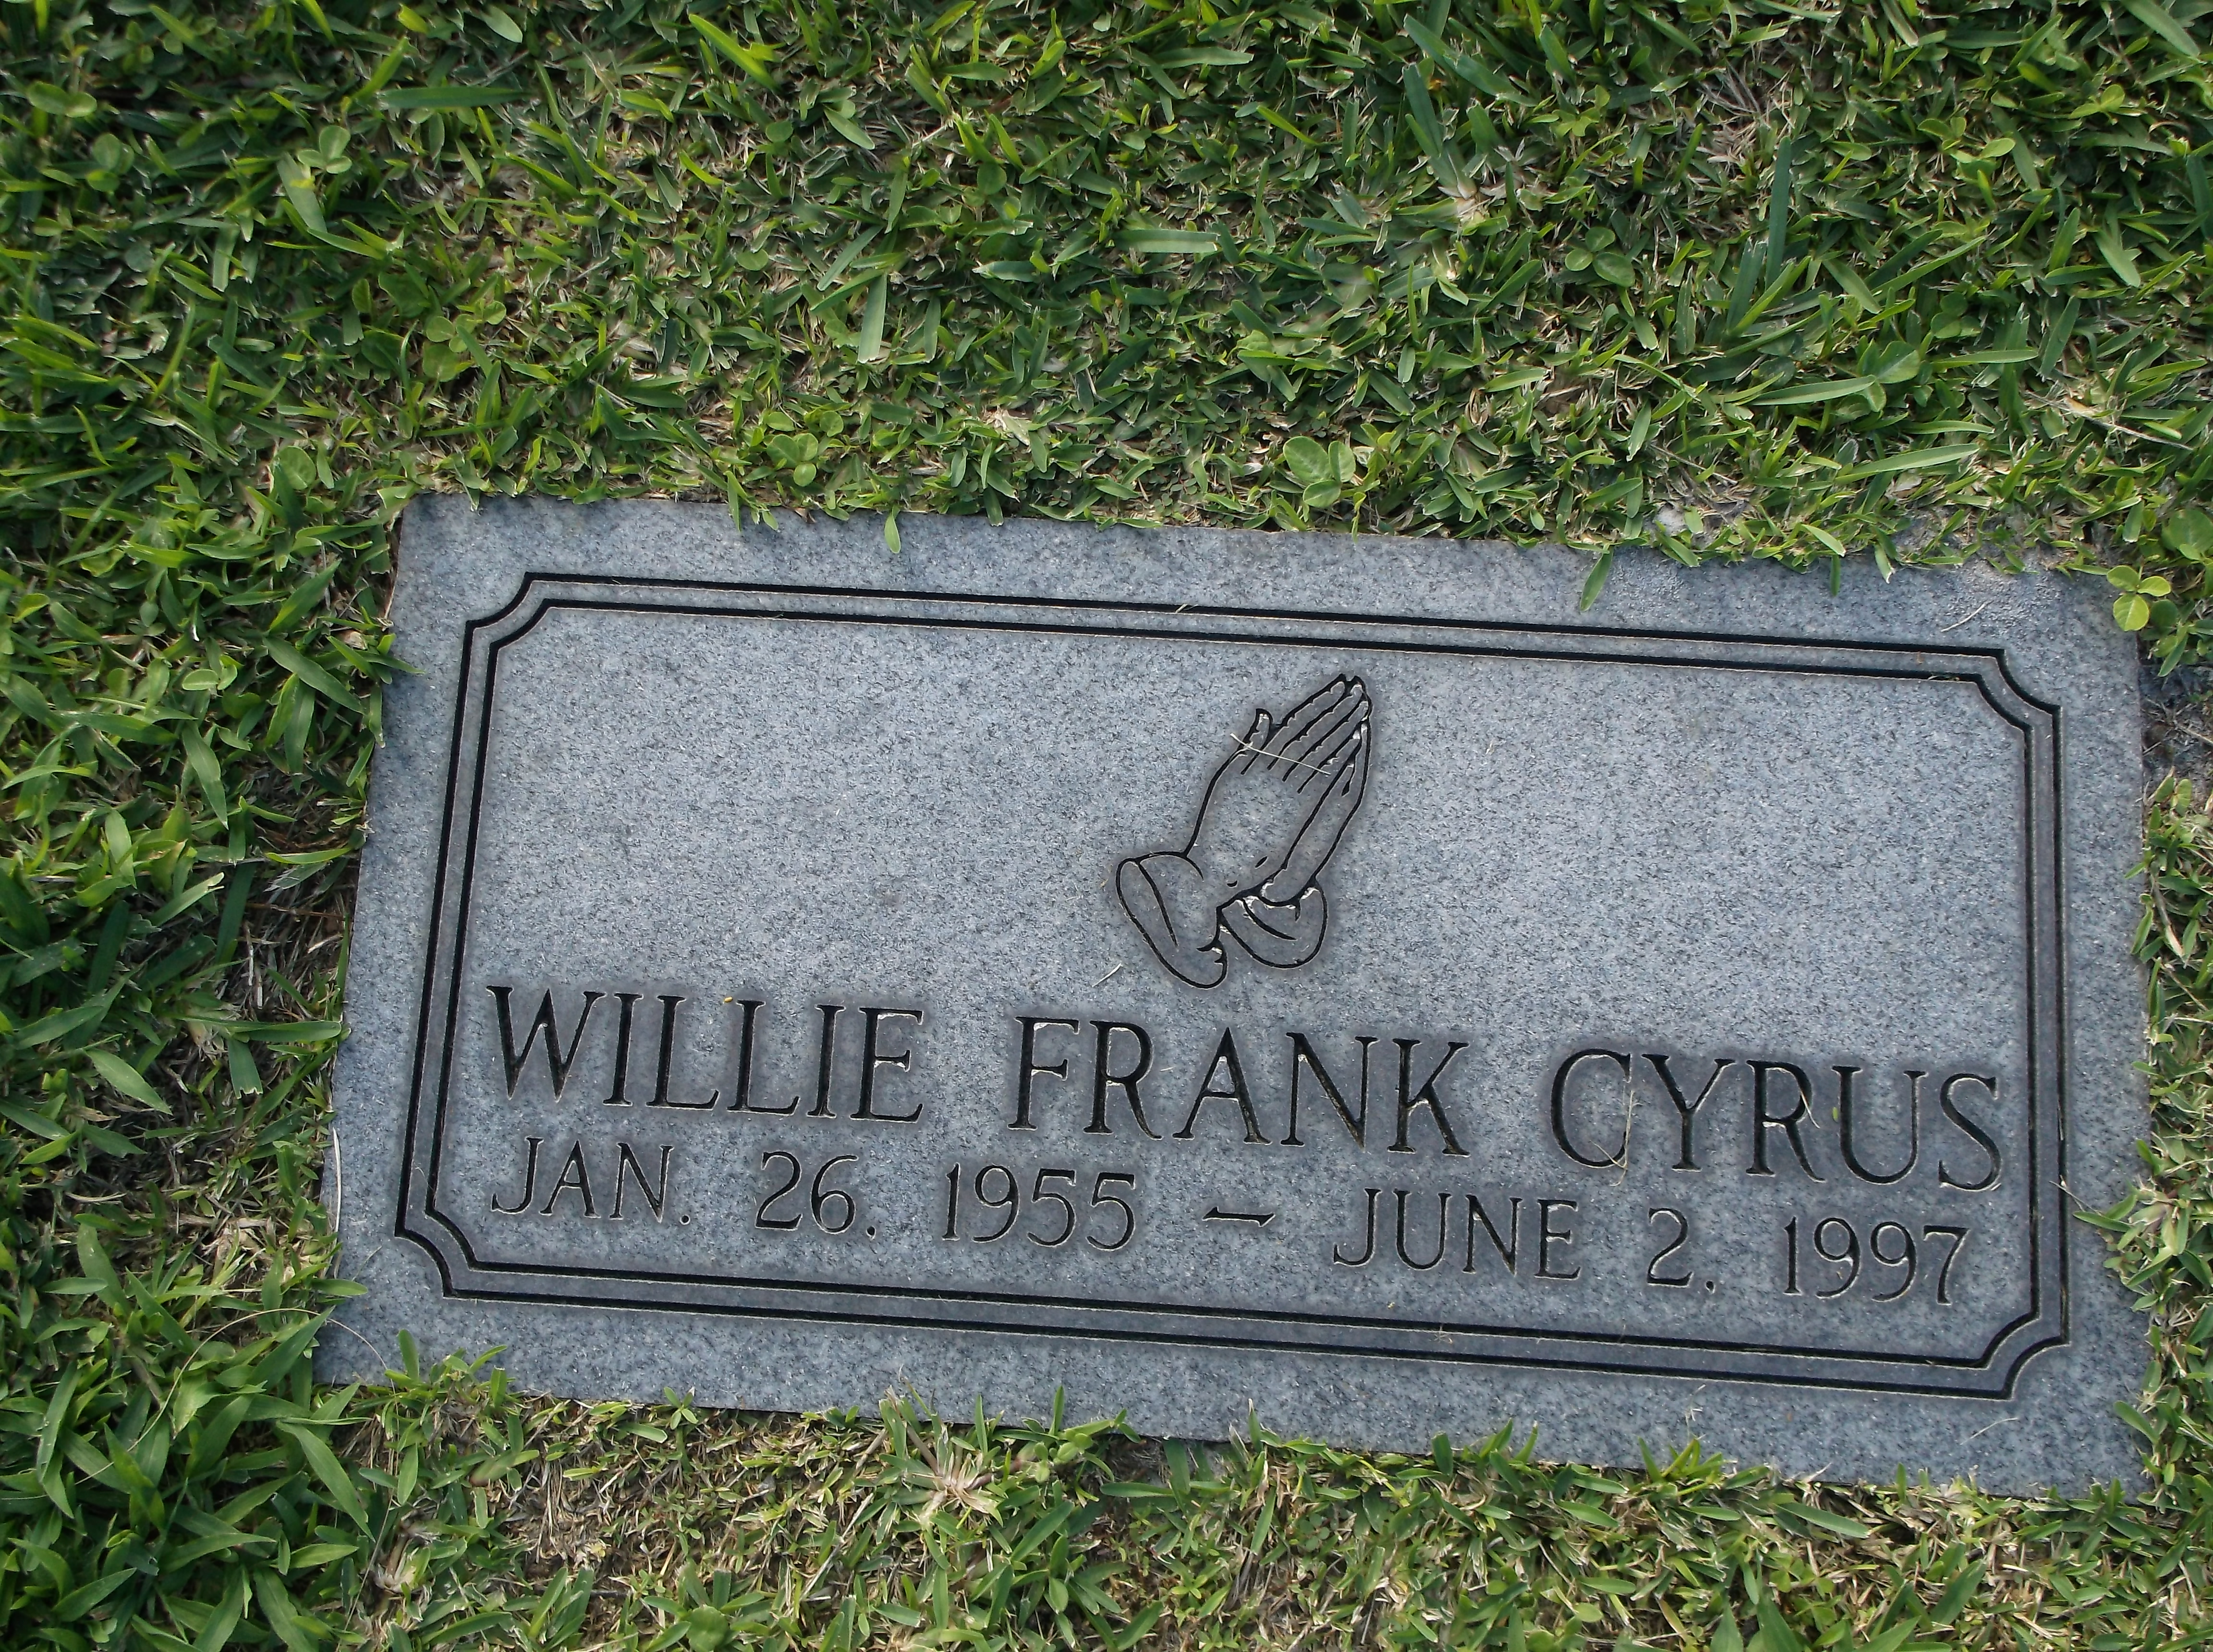 Willie Frank Cyrus